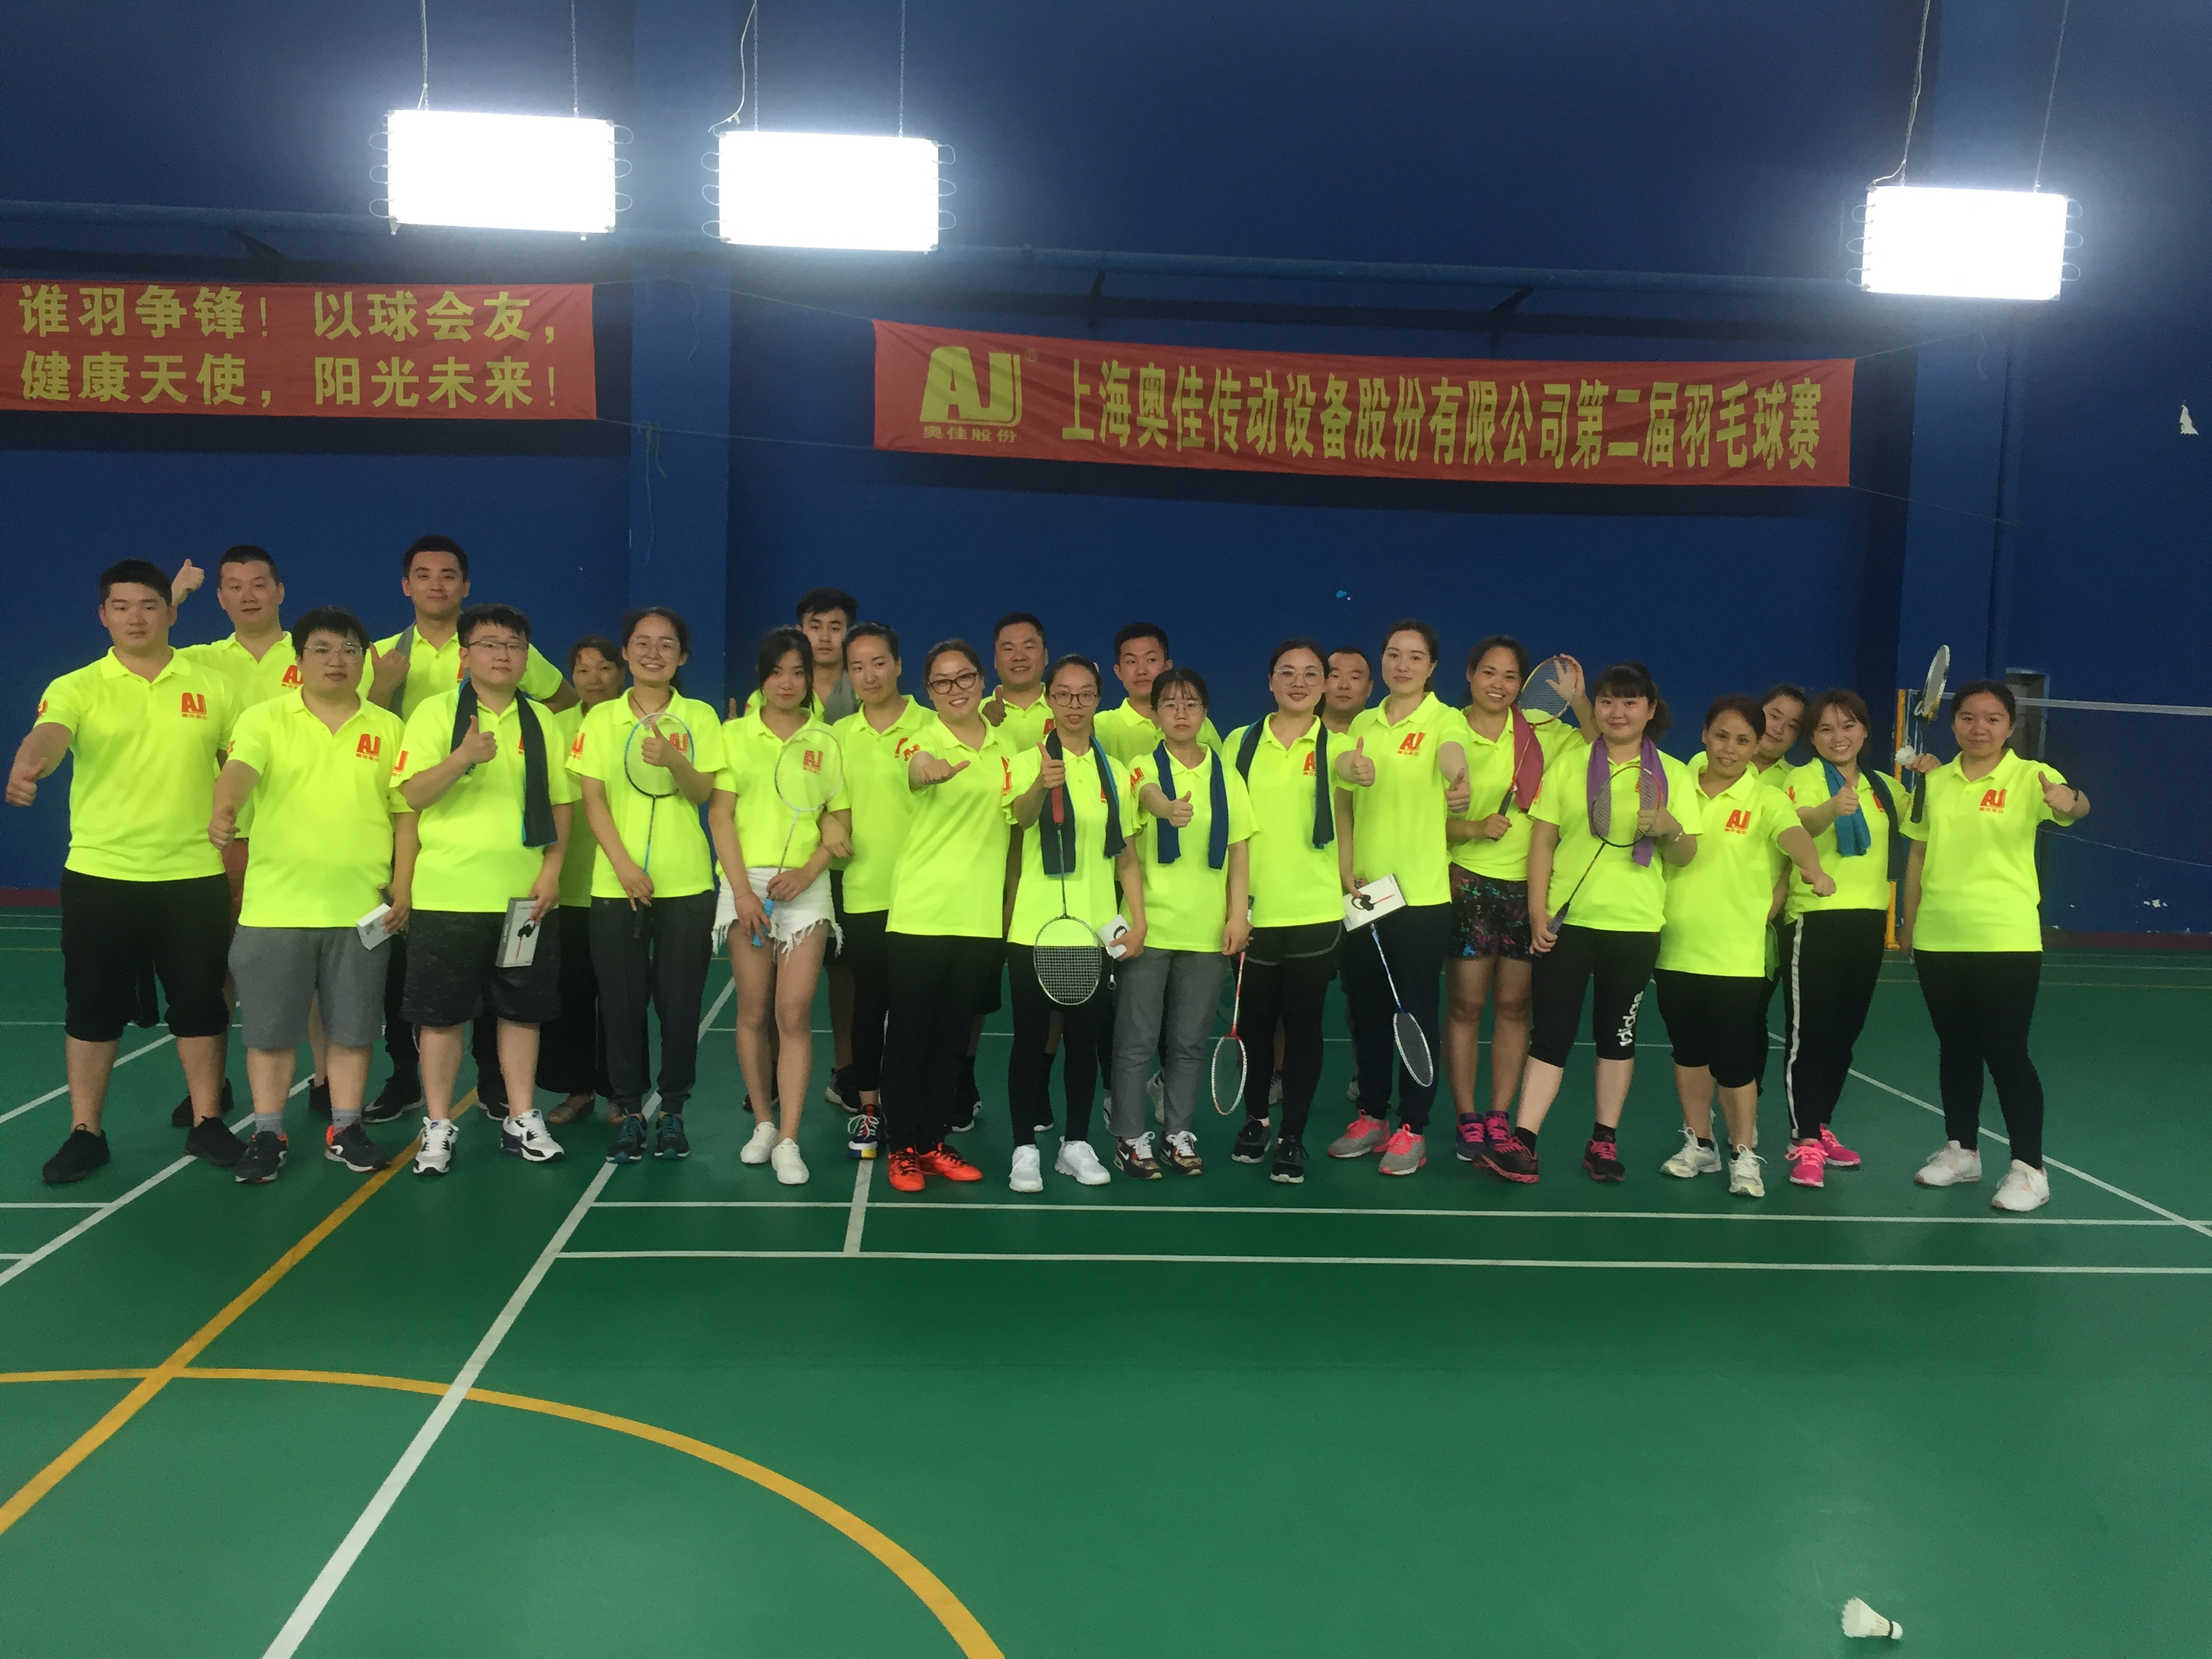 The Second Badminton Match in Shanghai All-ka